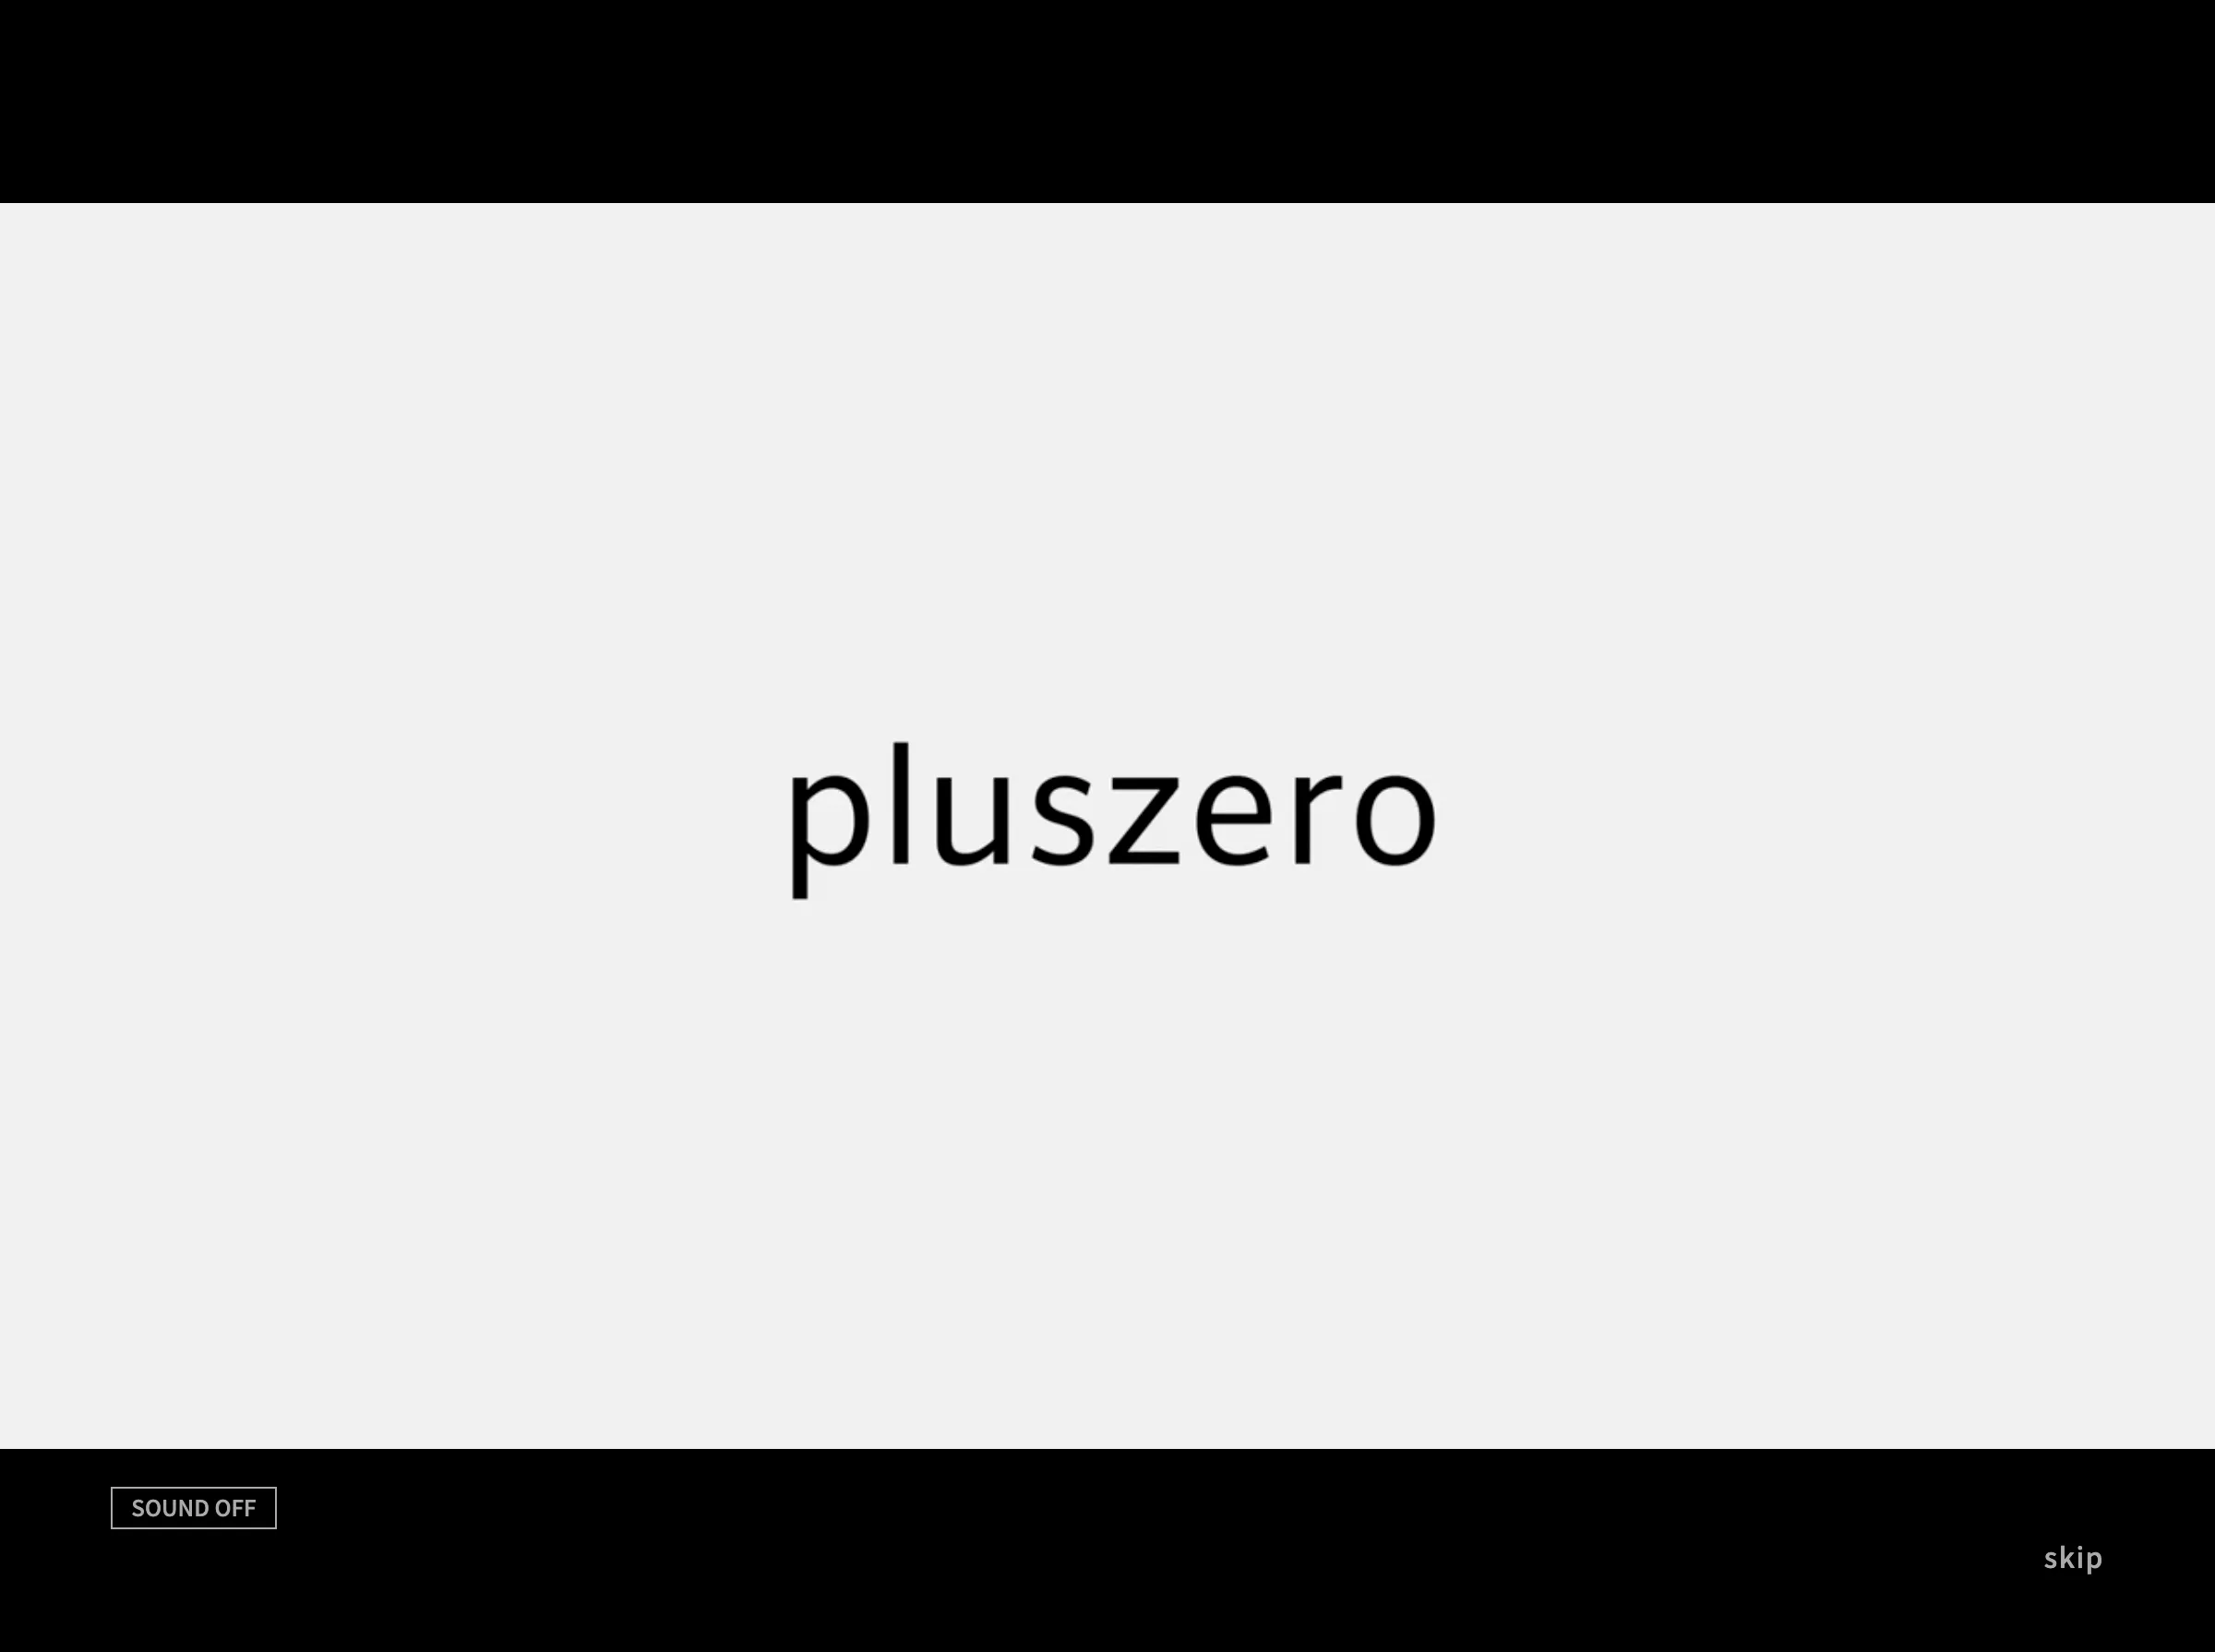 株式会社 pluszero_image